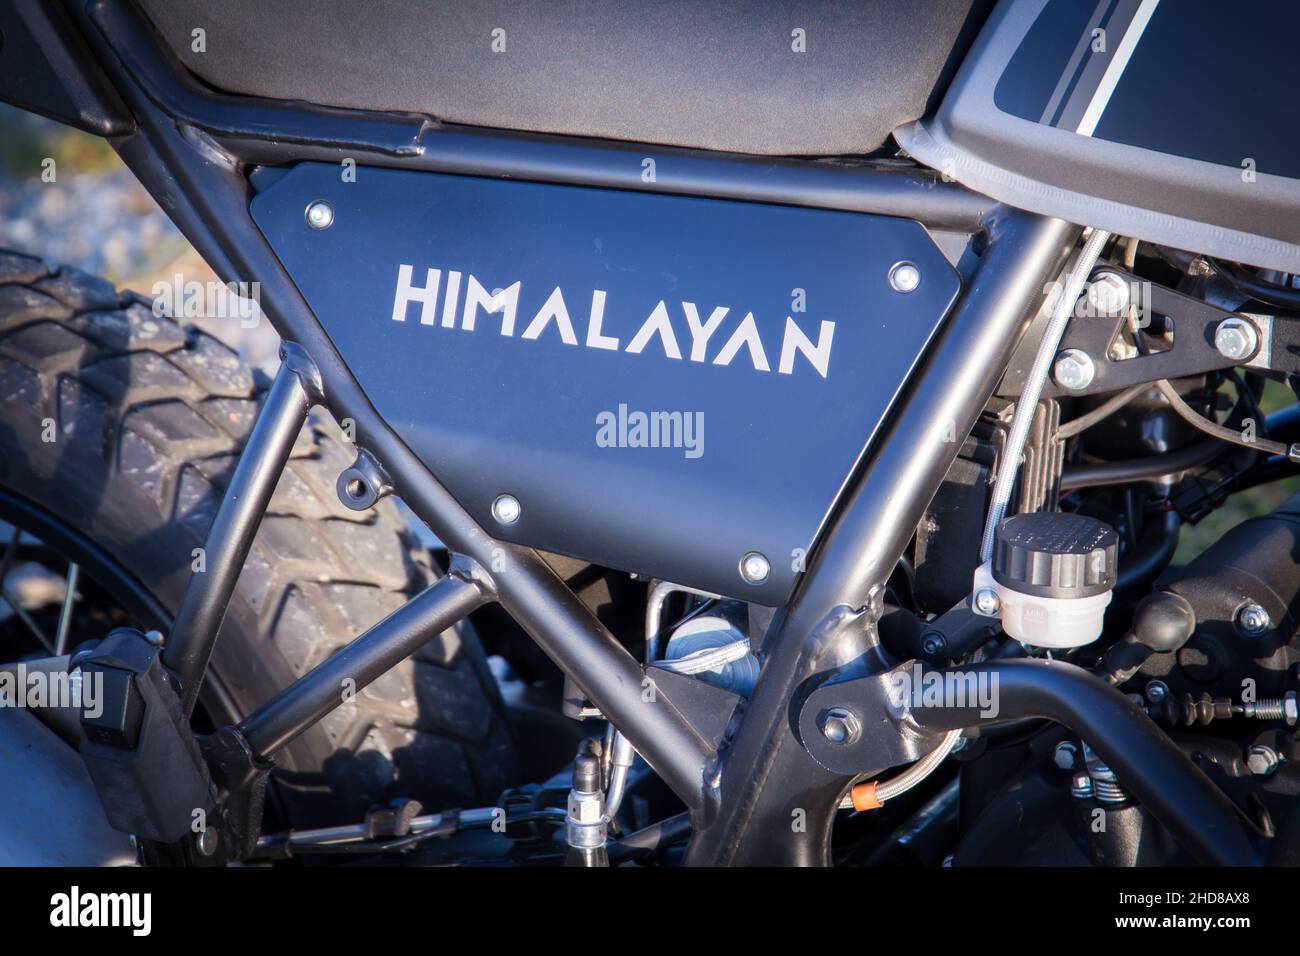 Closeup of Royal Enfield Himalayan motorcycle Stock Photo